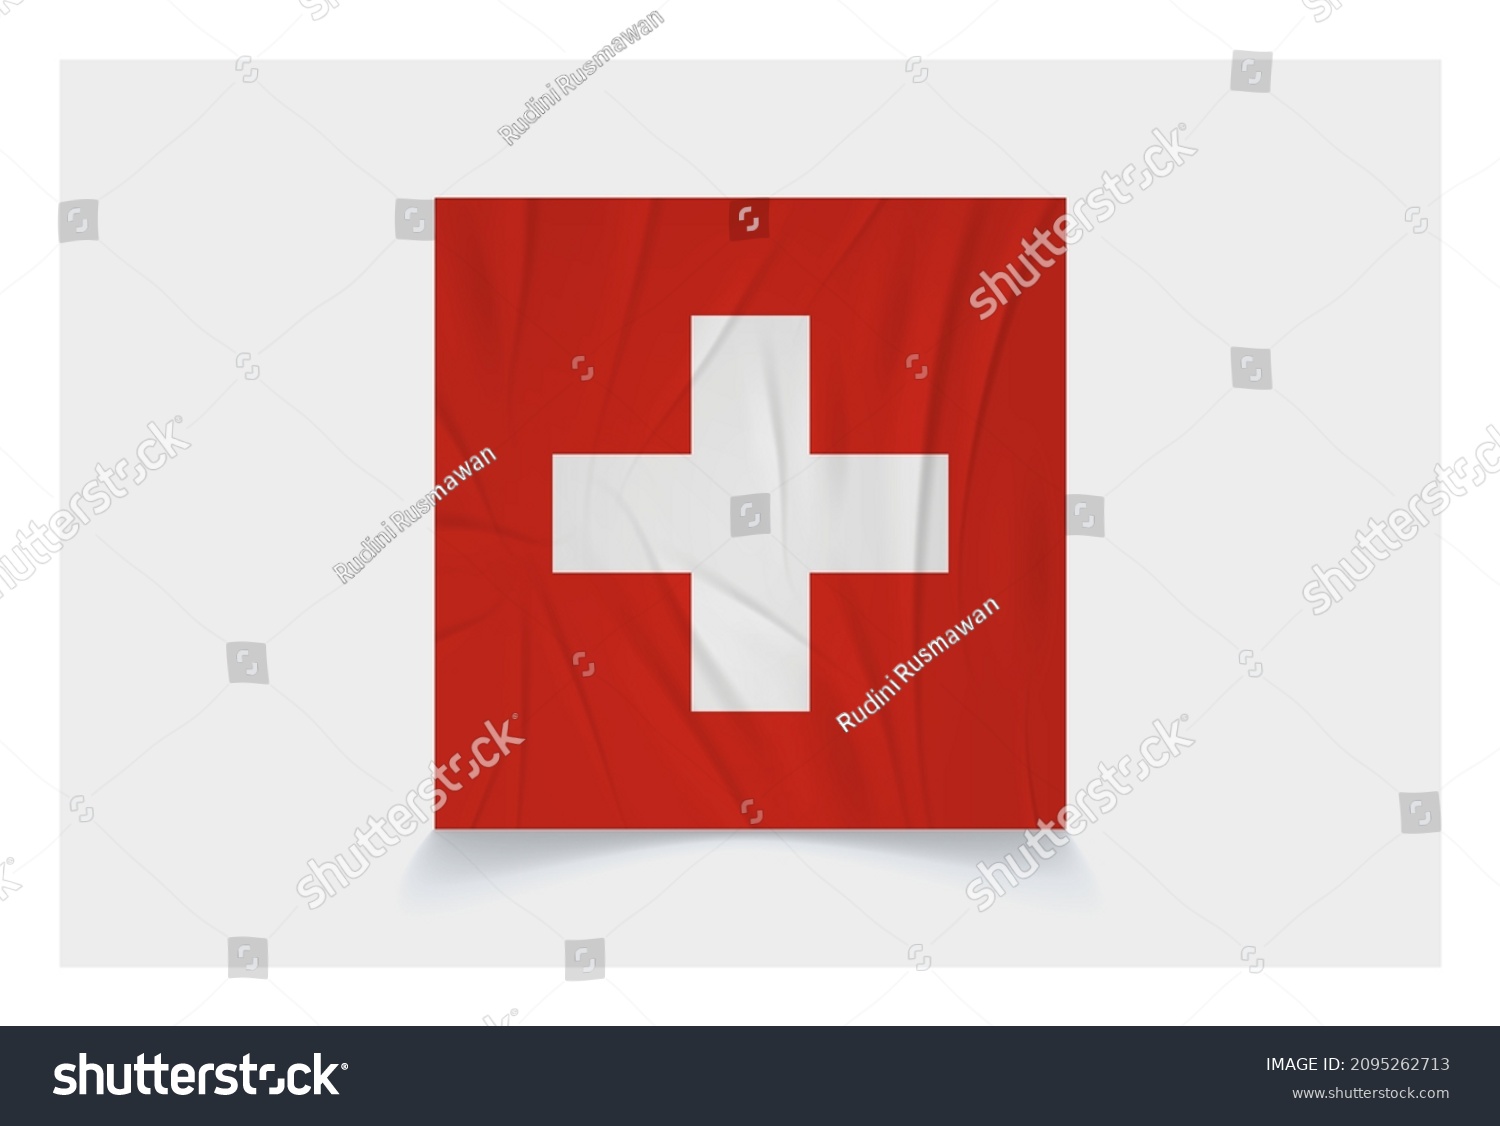 SVG of Stock Vector Flag of Switzerland - Proper Dimensions 1 : 1 svg